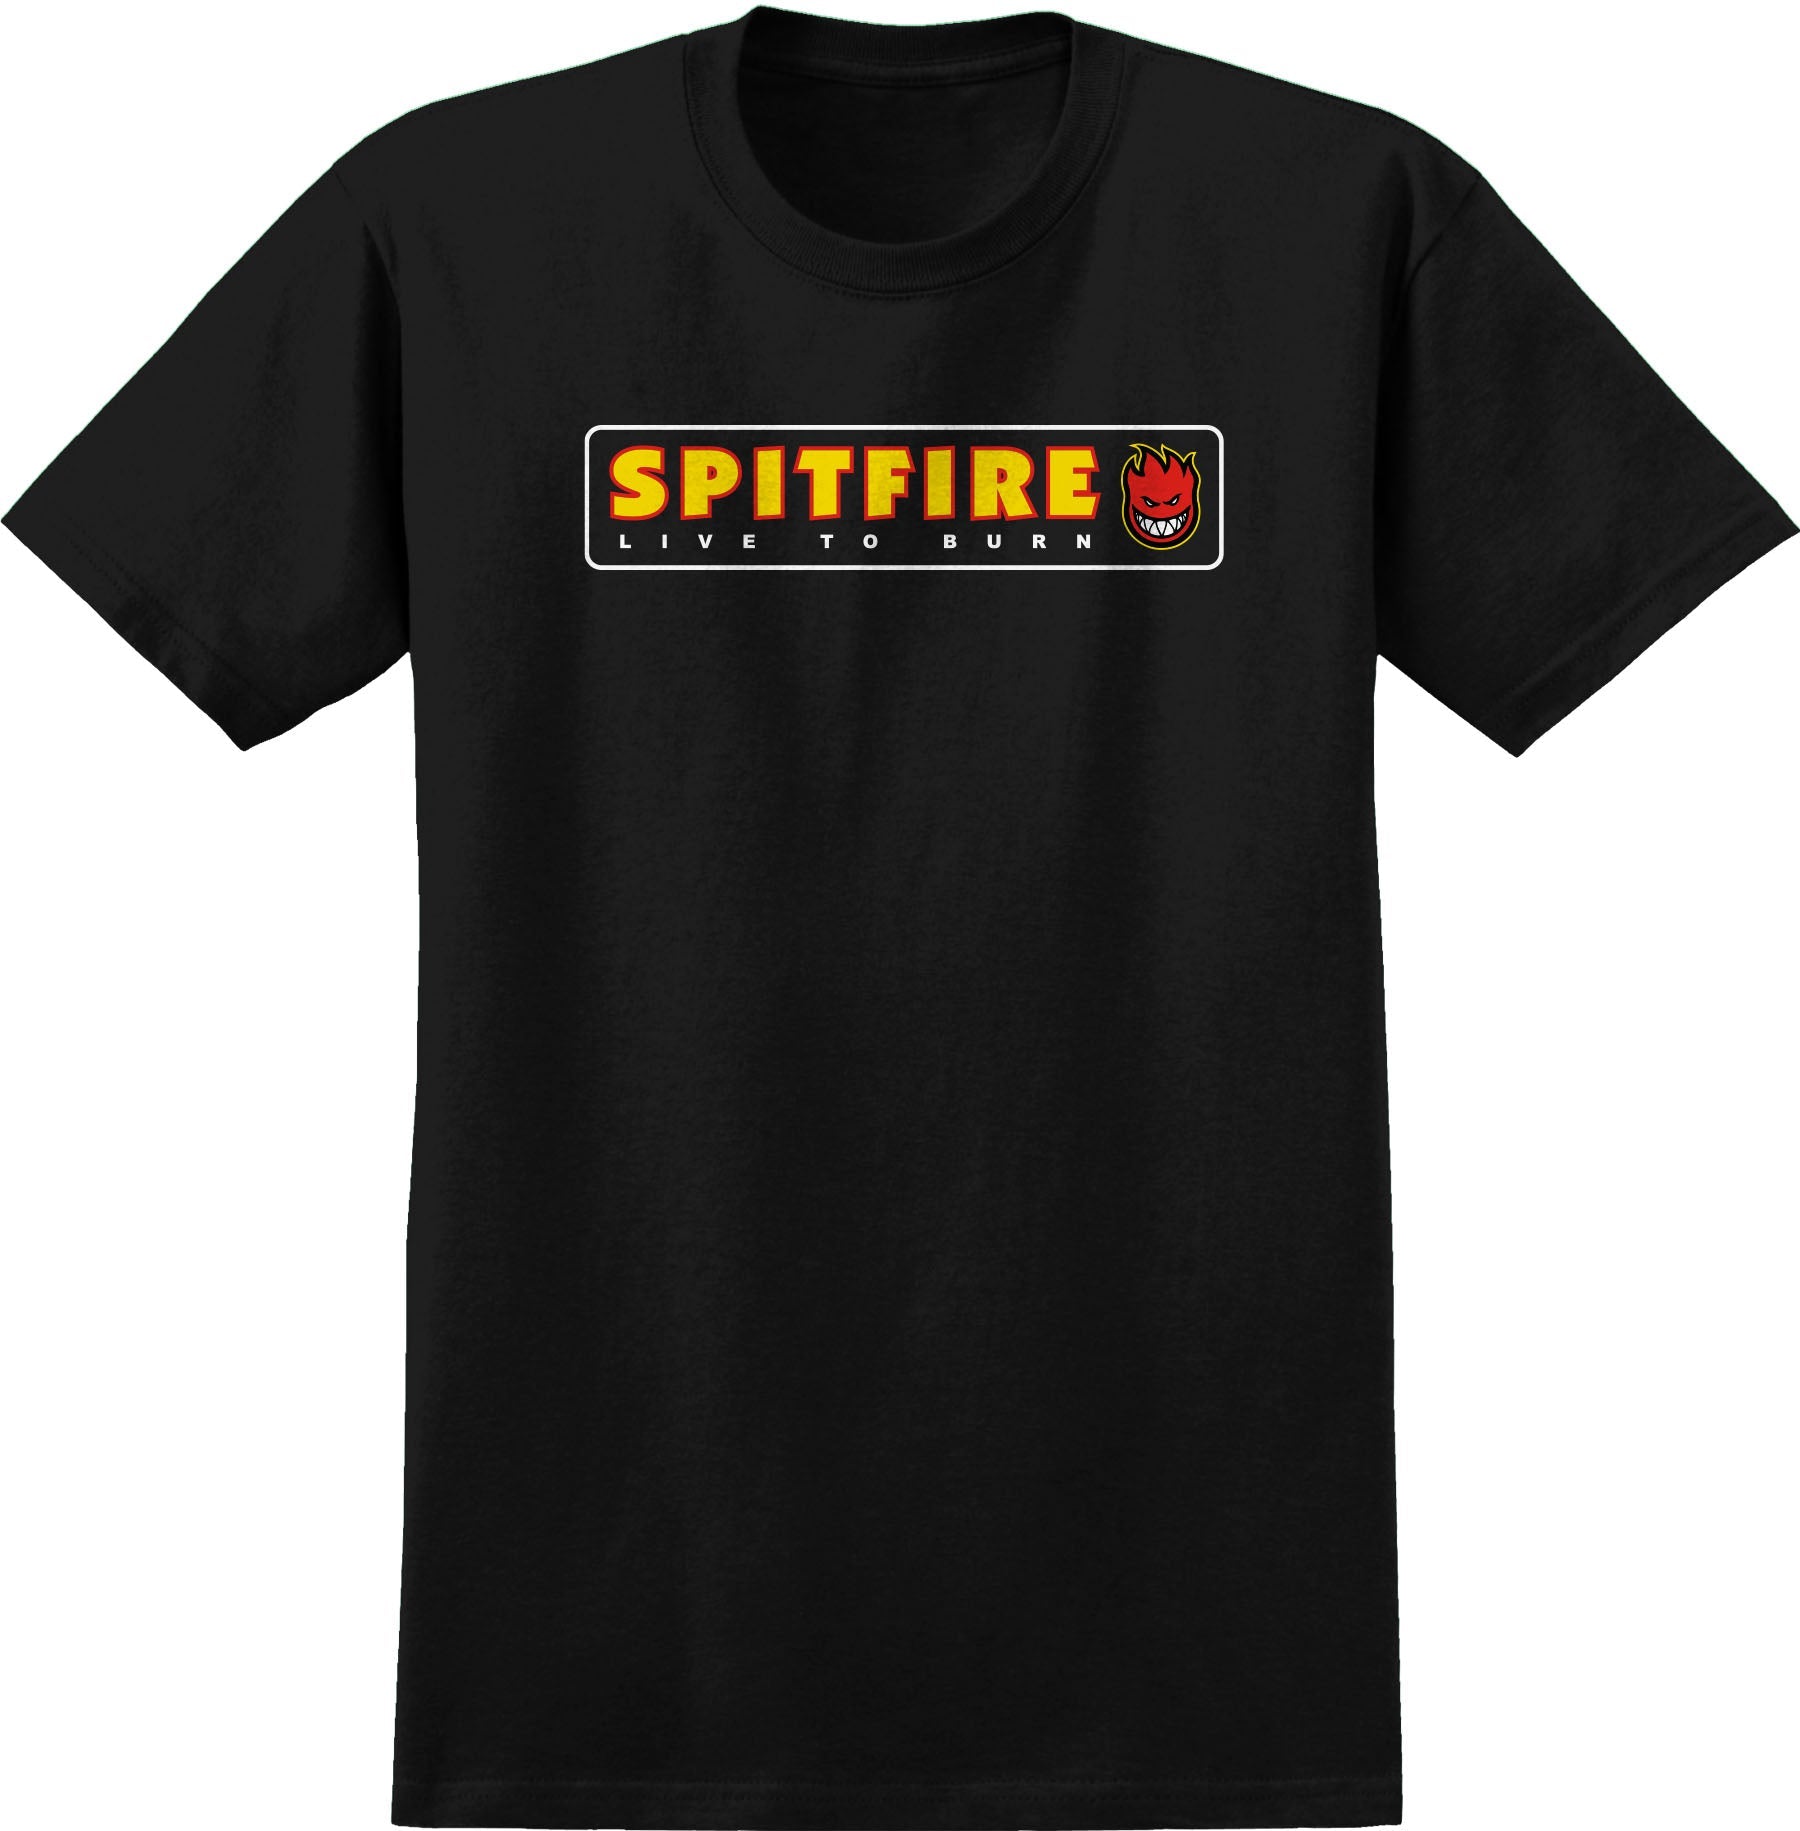 Live To Burn Spitfire T-Shirt